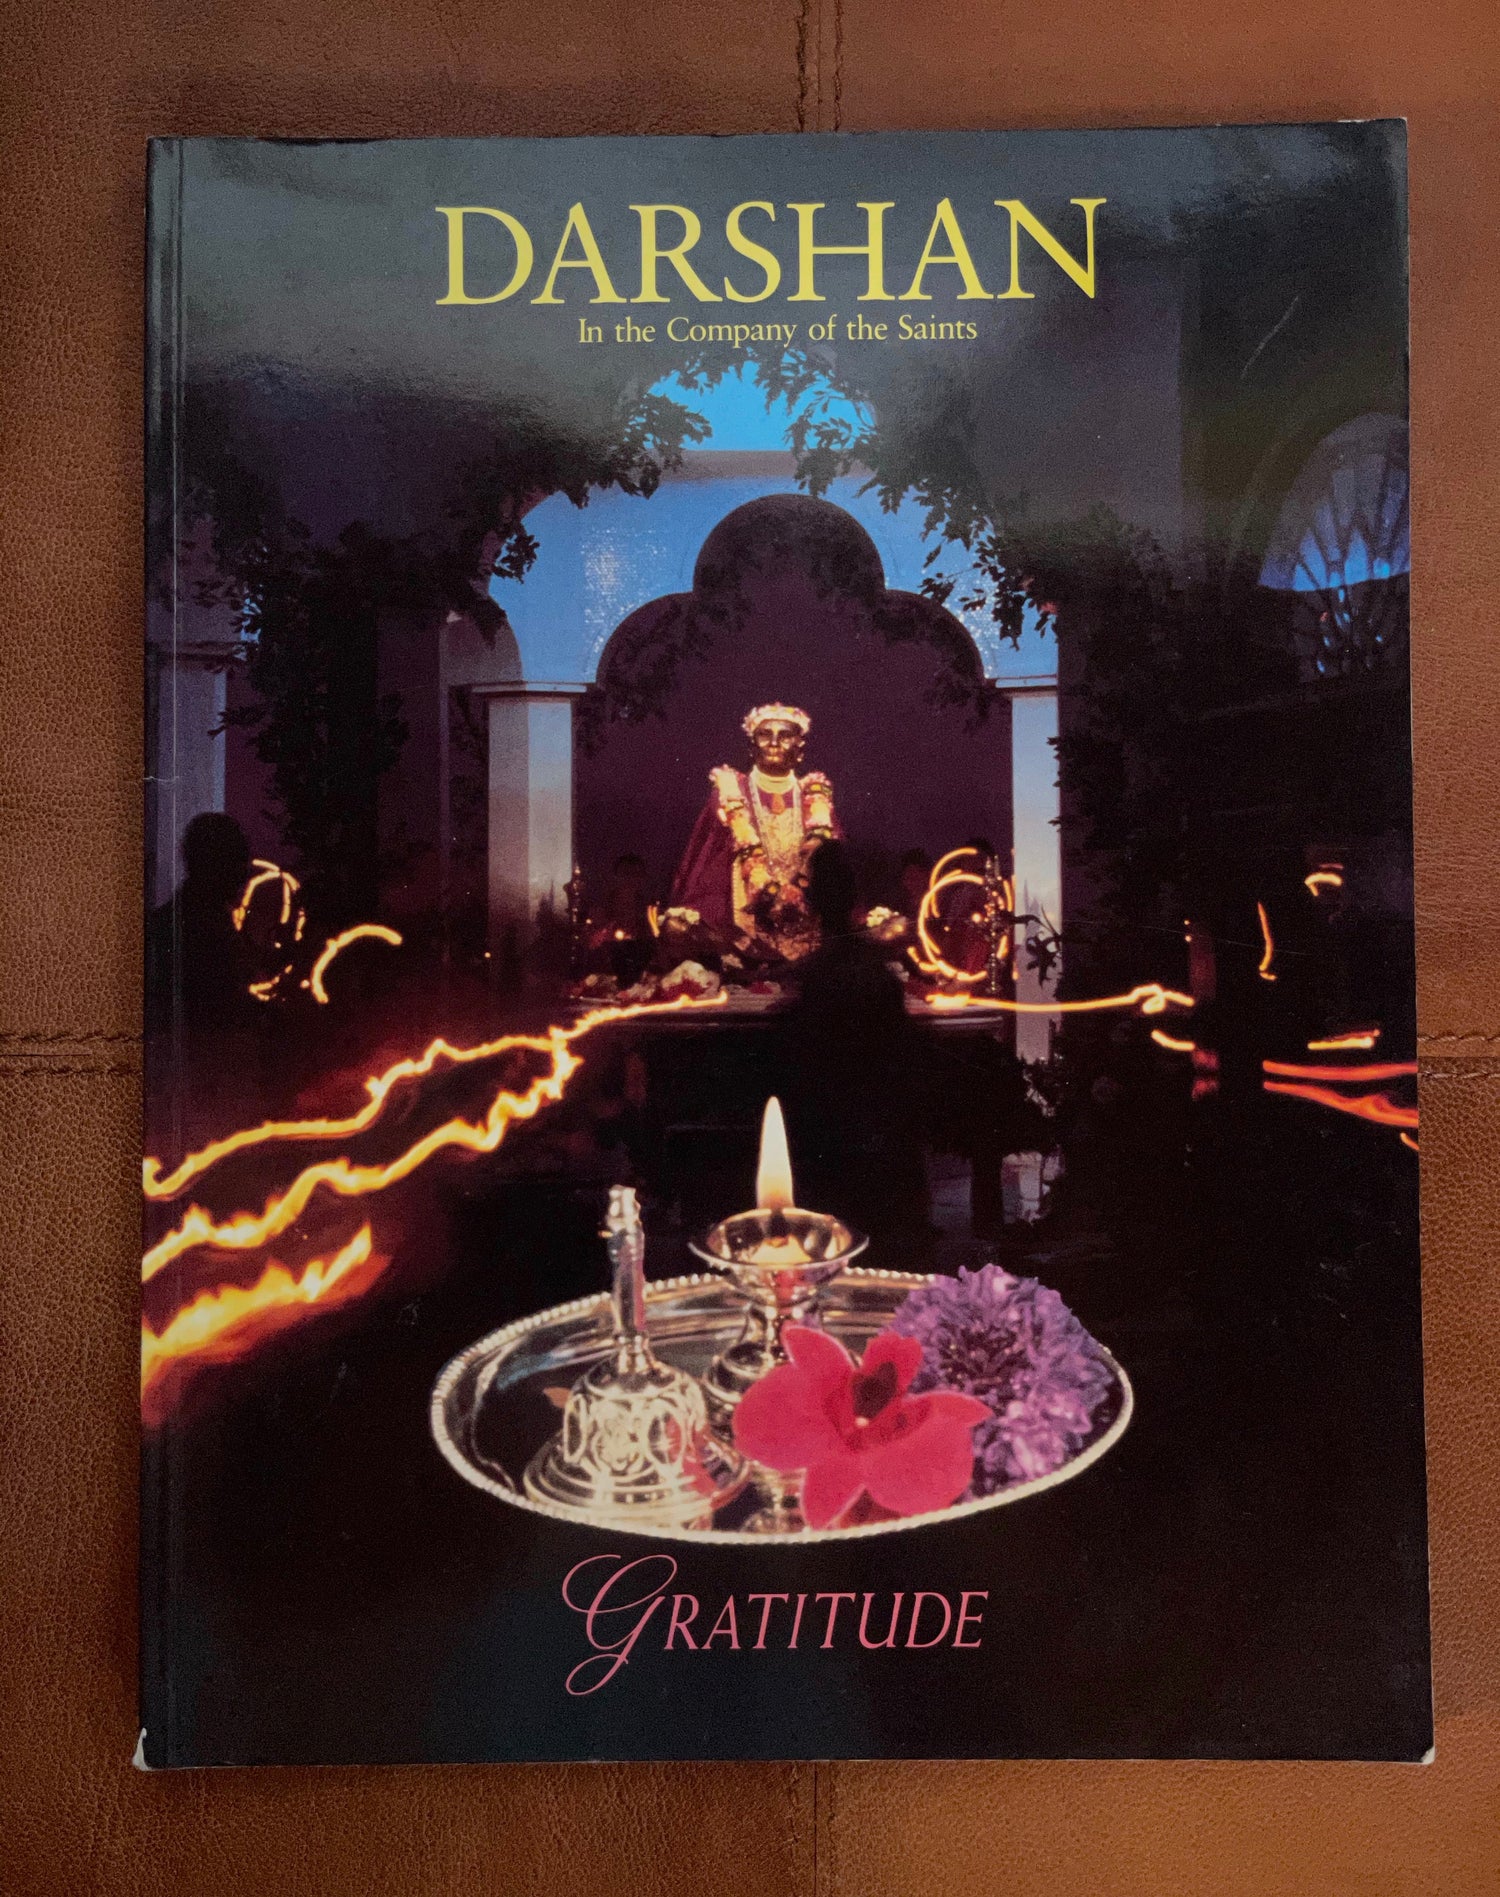 Darshan Magazine, In The Company of The Saints, Gratitude